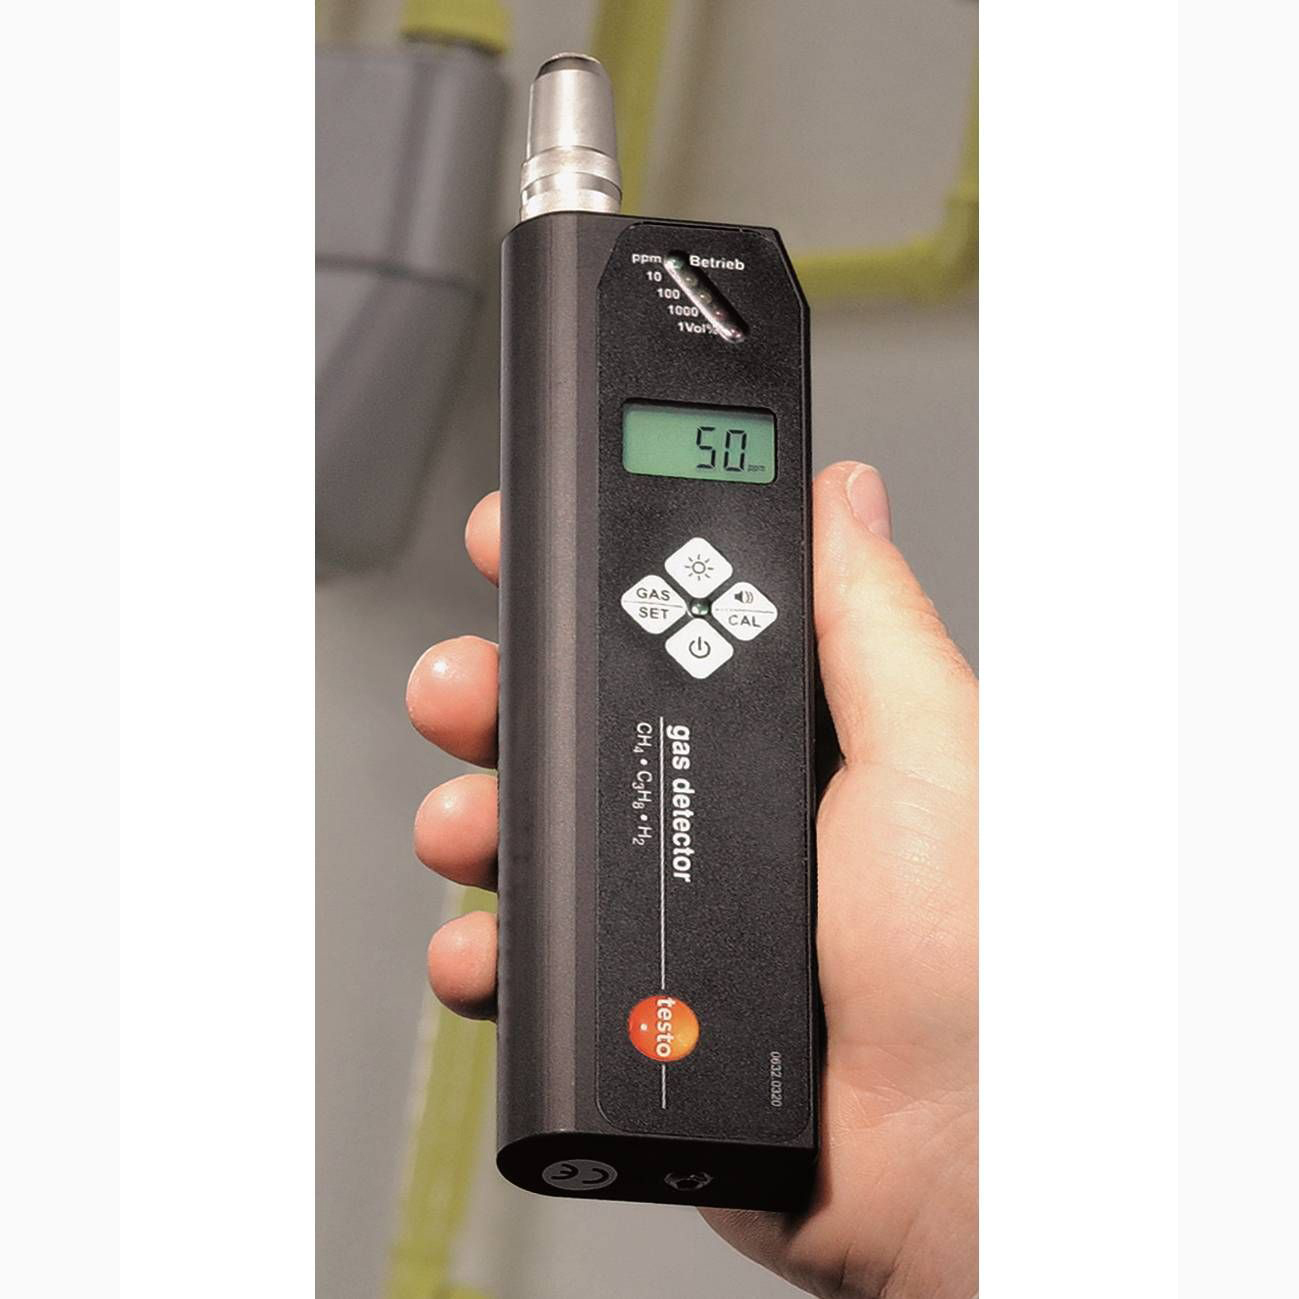 德国德图testo gas detector - 可燃气体检测仪